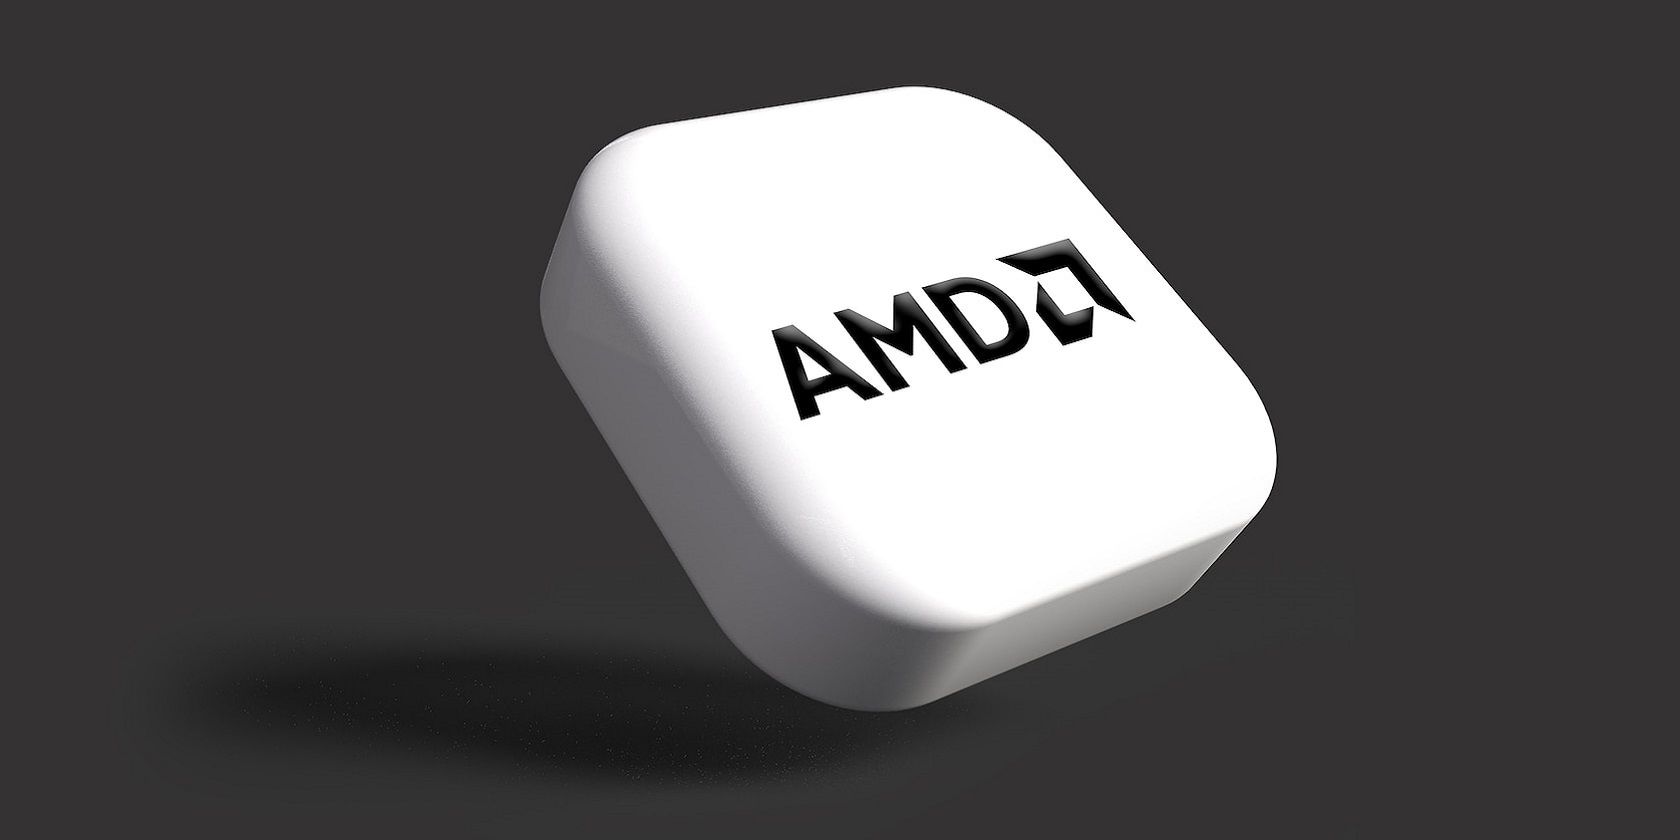 The Amd Logo.jpg